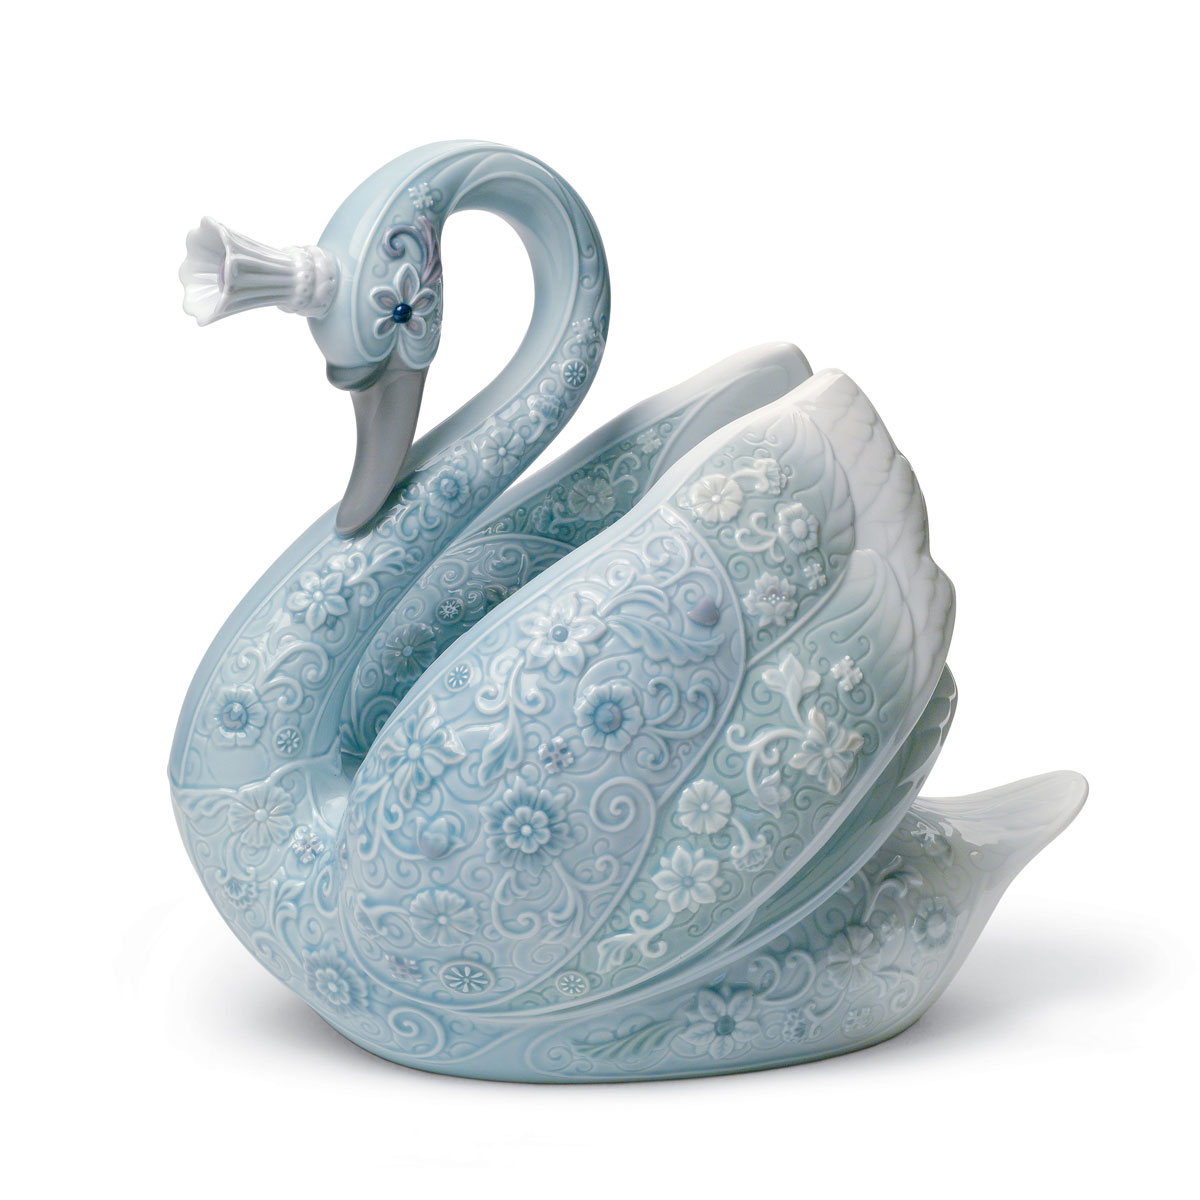 Lladro Classic Sculpture, The Swan Princess Figurine